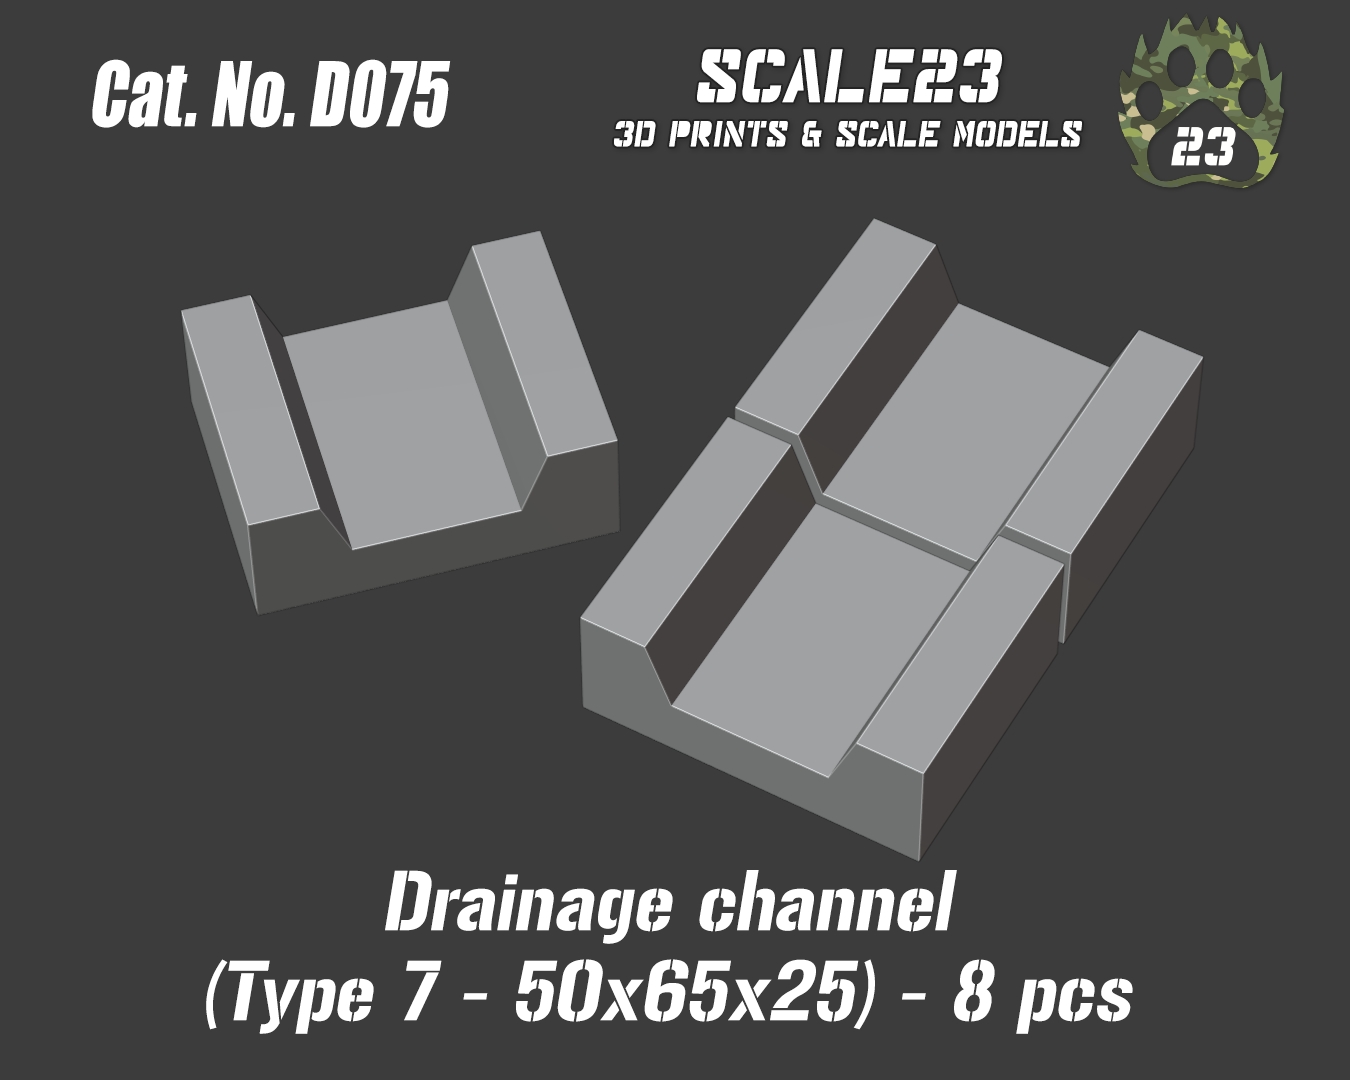 Drainage channel 50x65x25 (8pc)